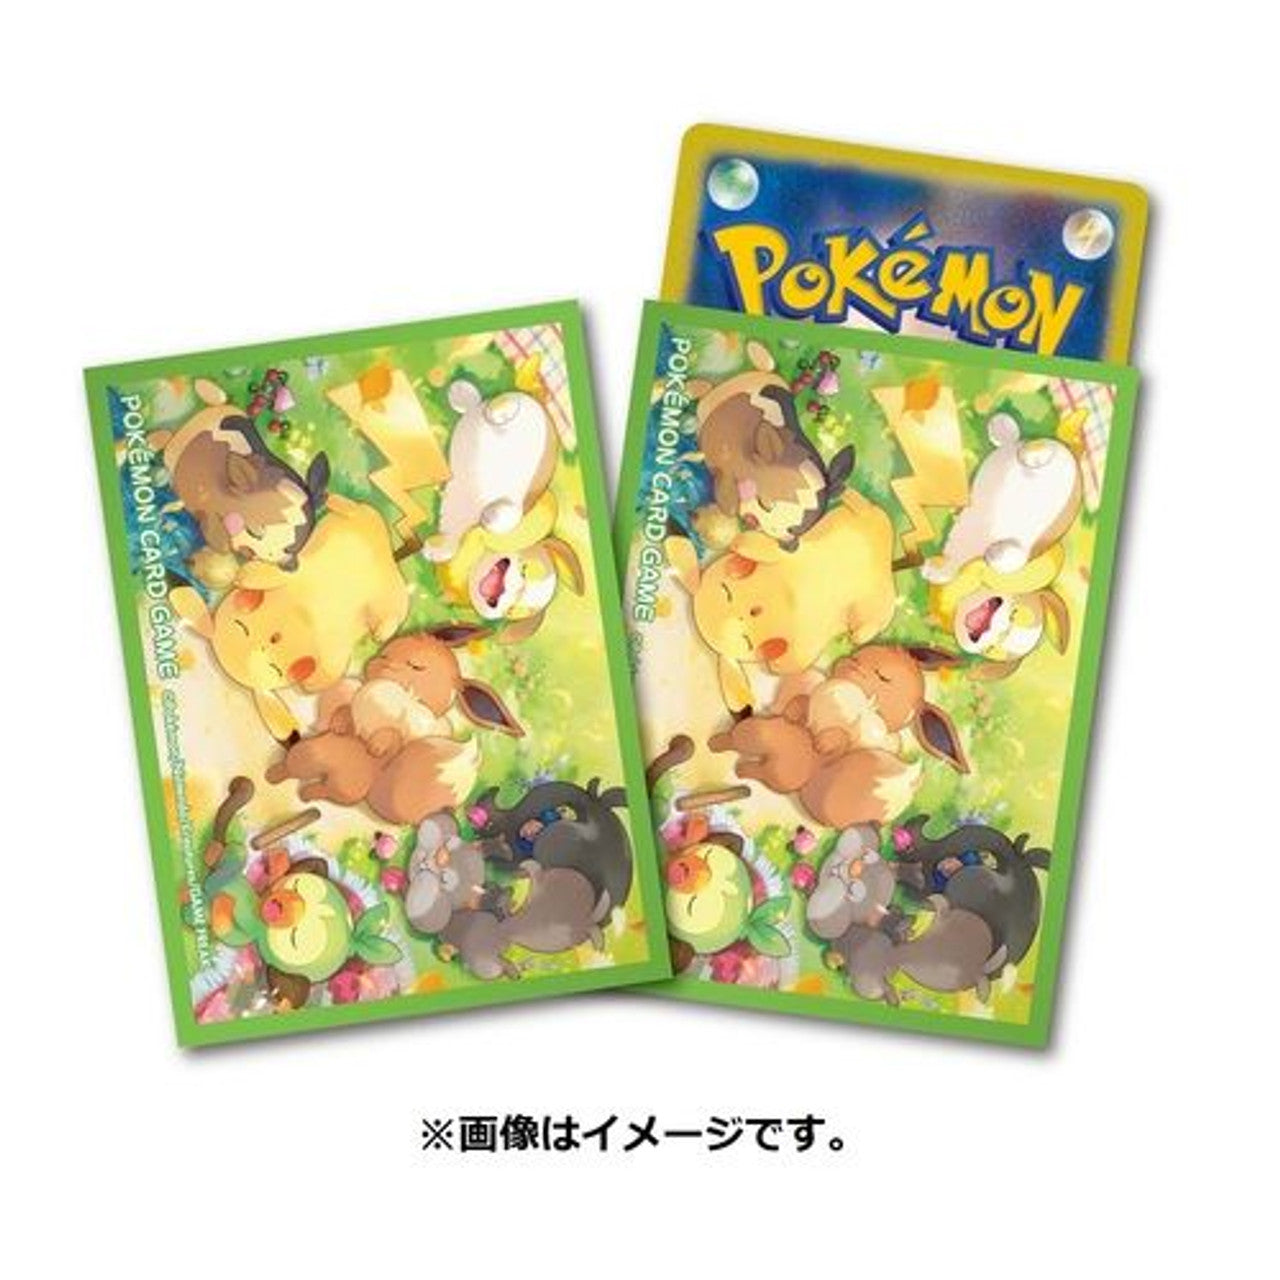 Pokémon Center Trading Card Game Official Card Sleeves x64 - Pikachu Minna Otsukaresama